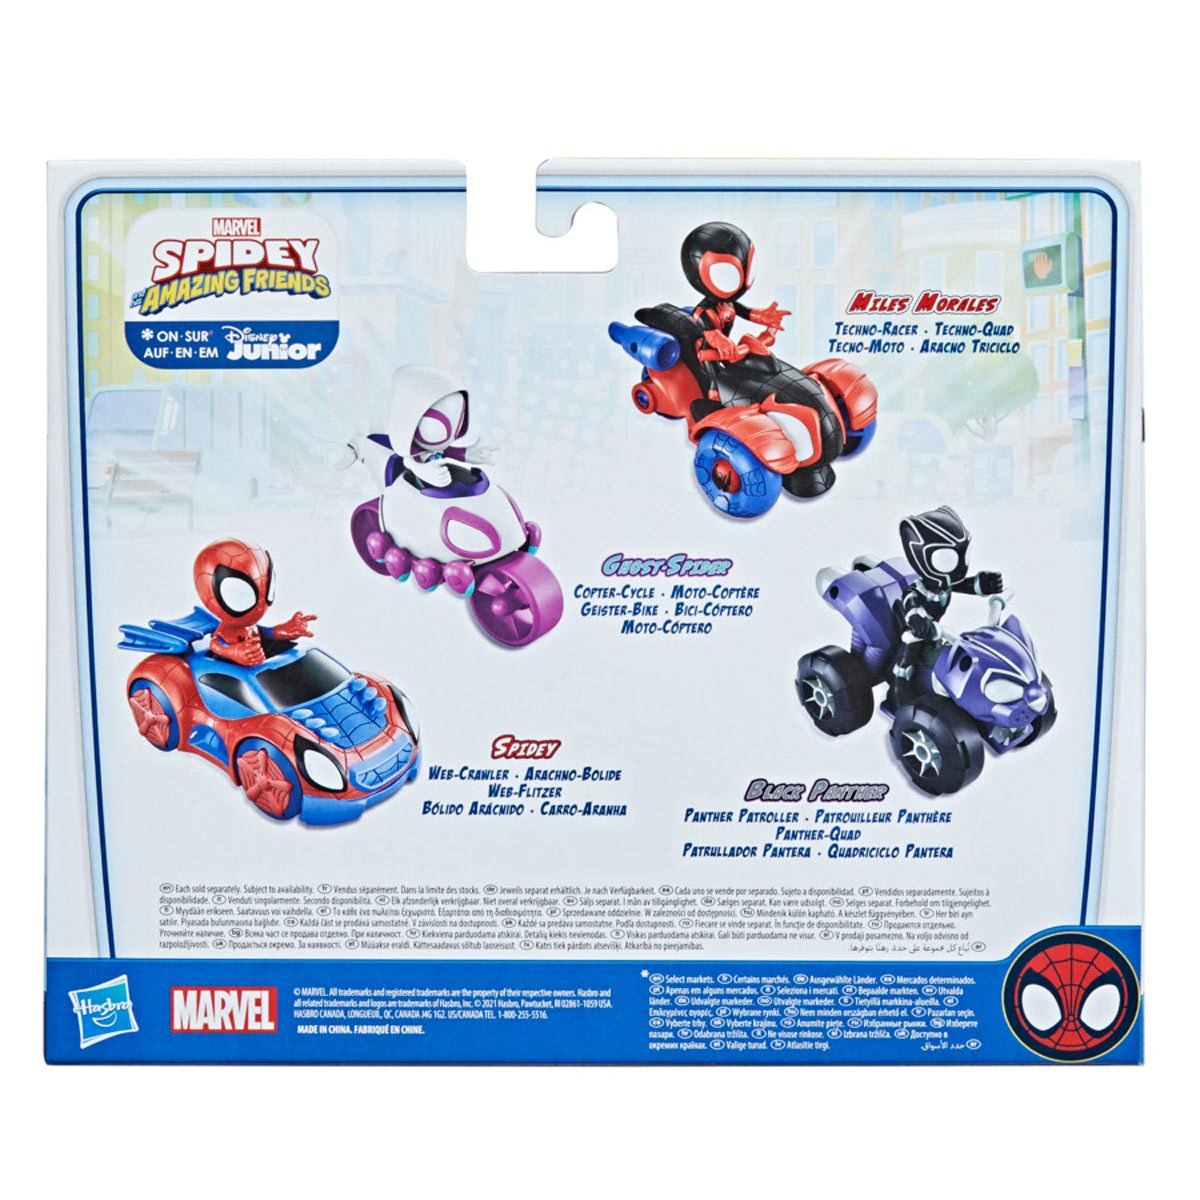 Marvel Spider-Man Super arachno-moto - Marvel